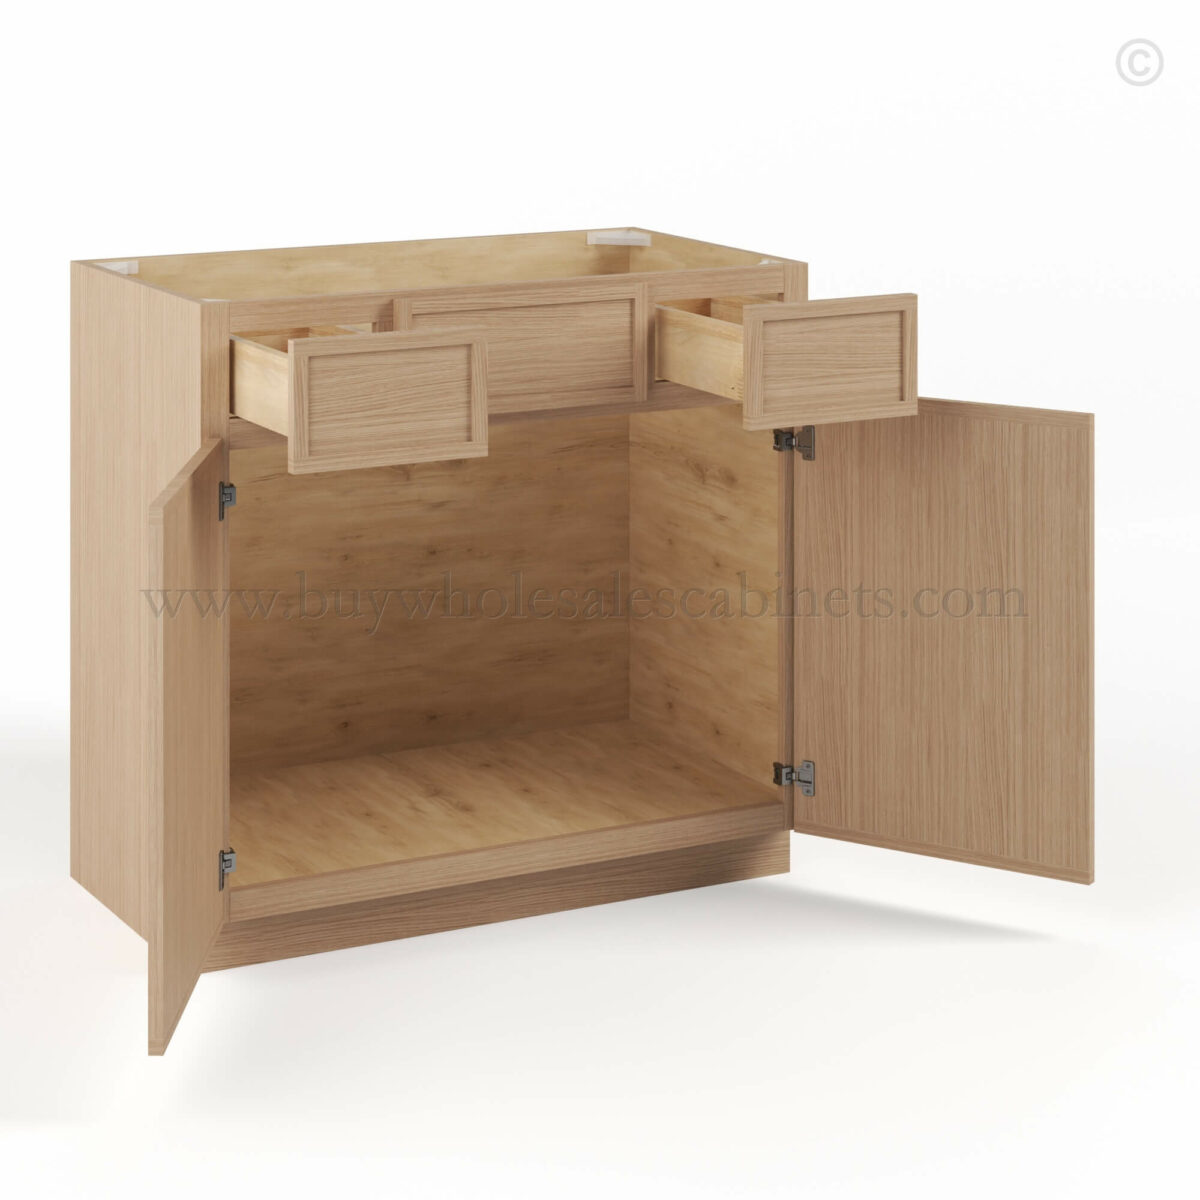 Slim Oak Shaker Vanity Sink Drawer Base Cabinet, rta cabinets, wholesale cabinets